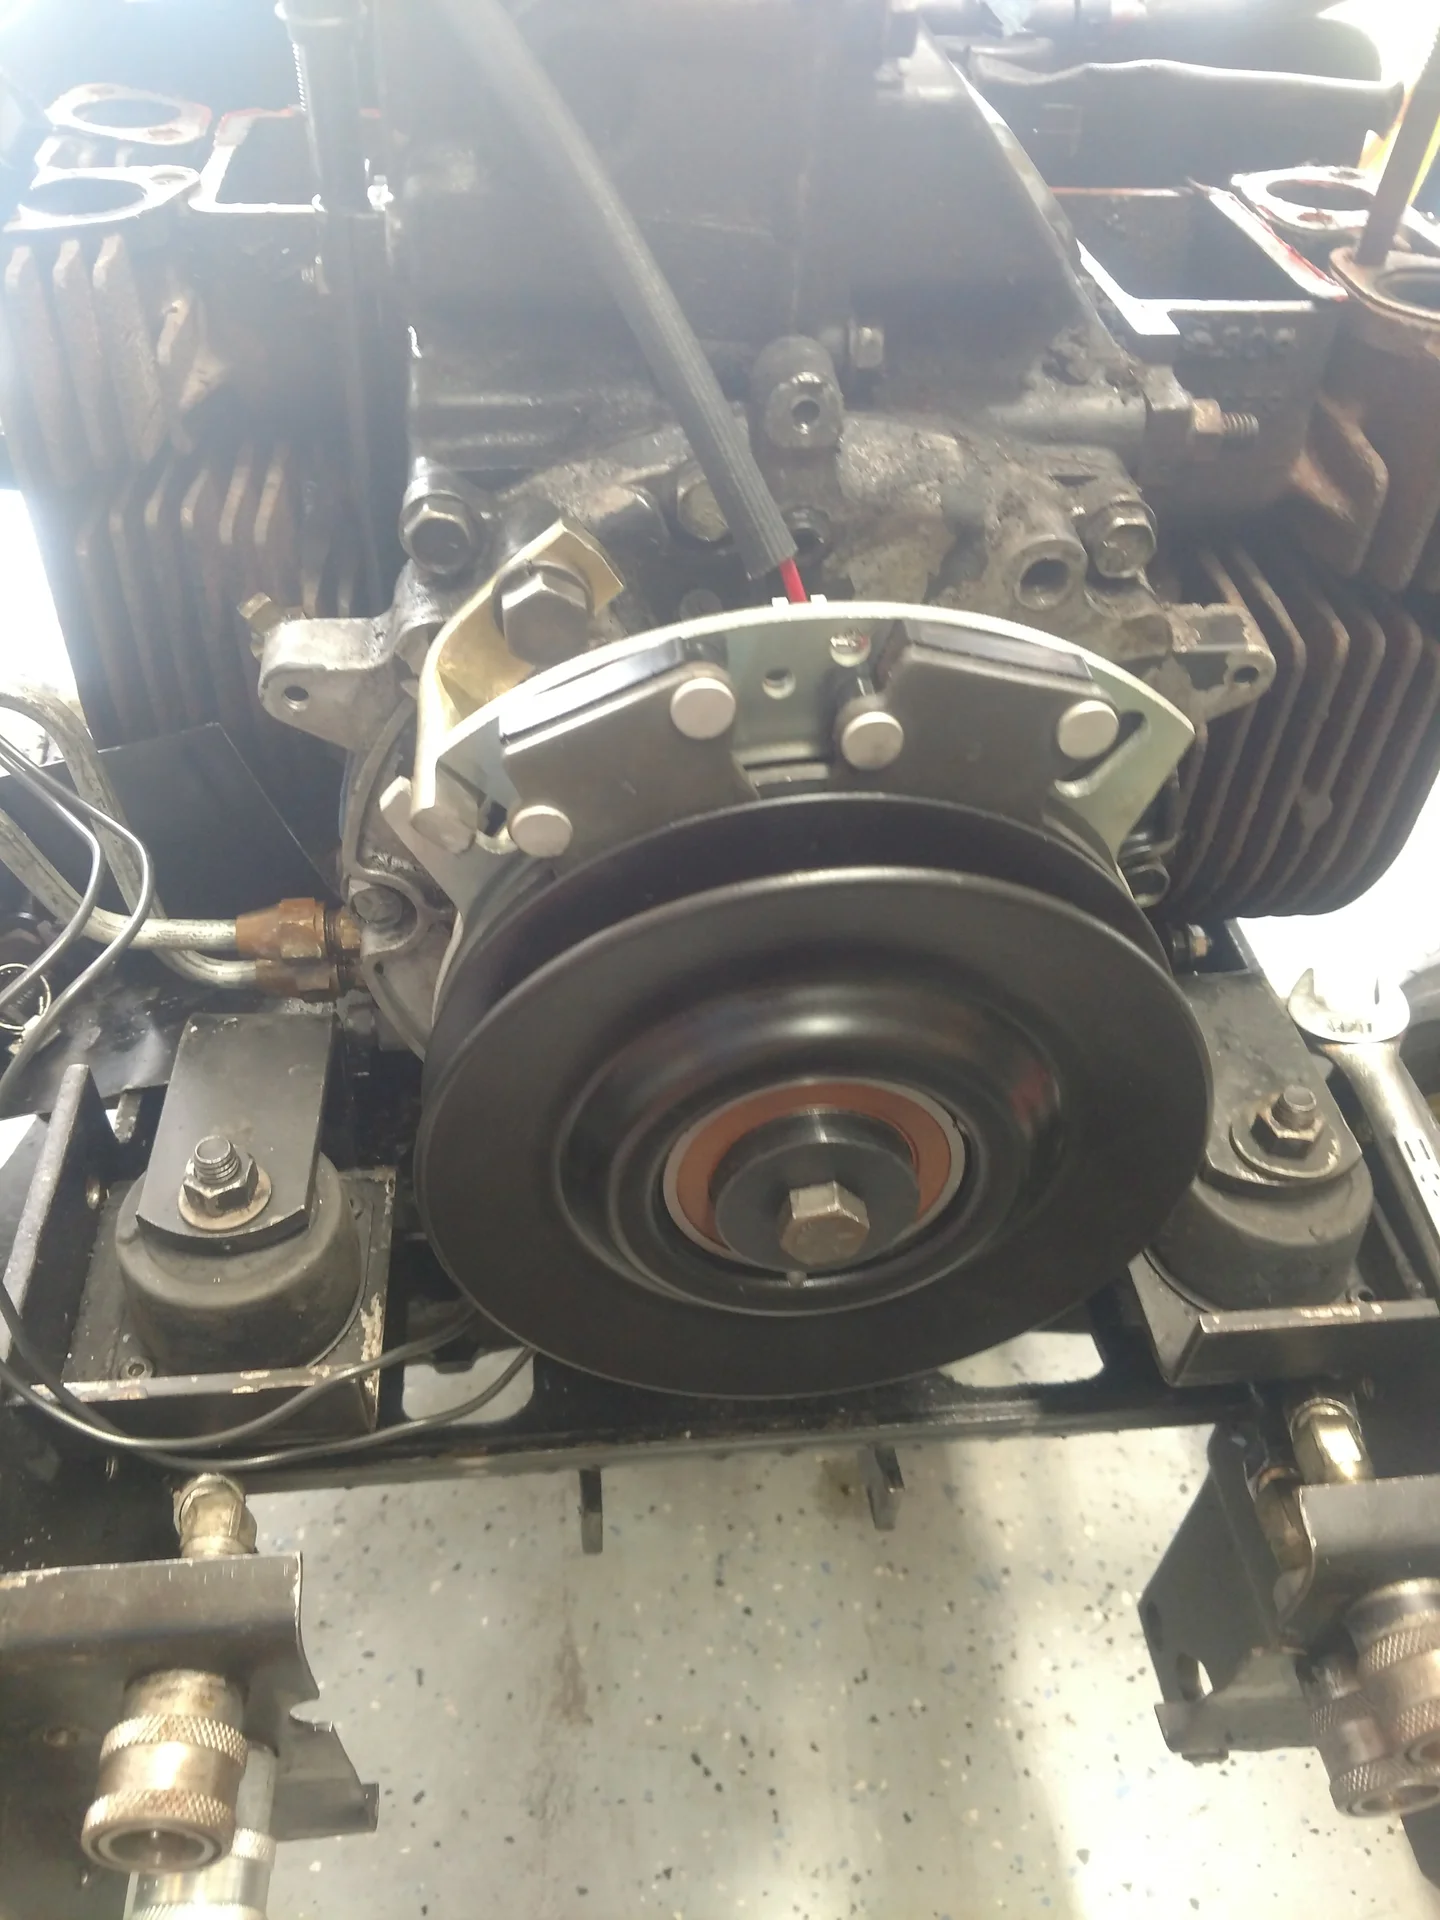 Kohler Engine Cranks But Won't Start? Here's How to Fix It